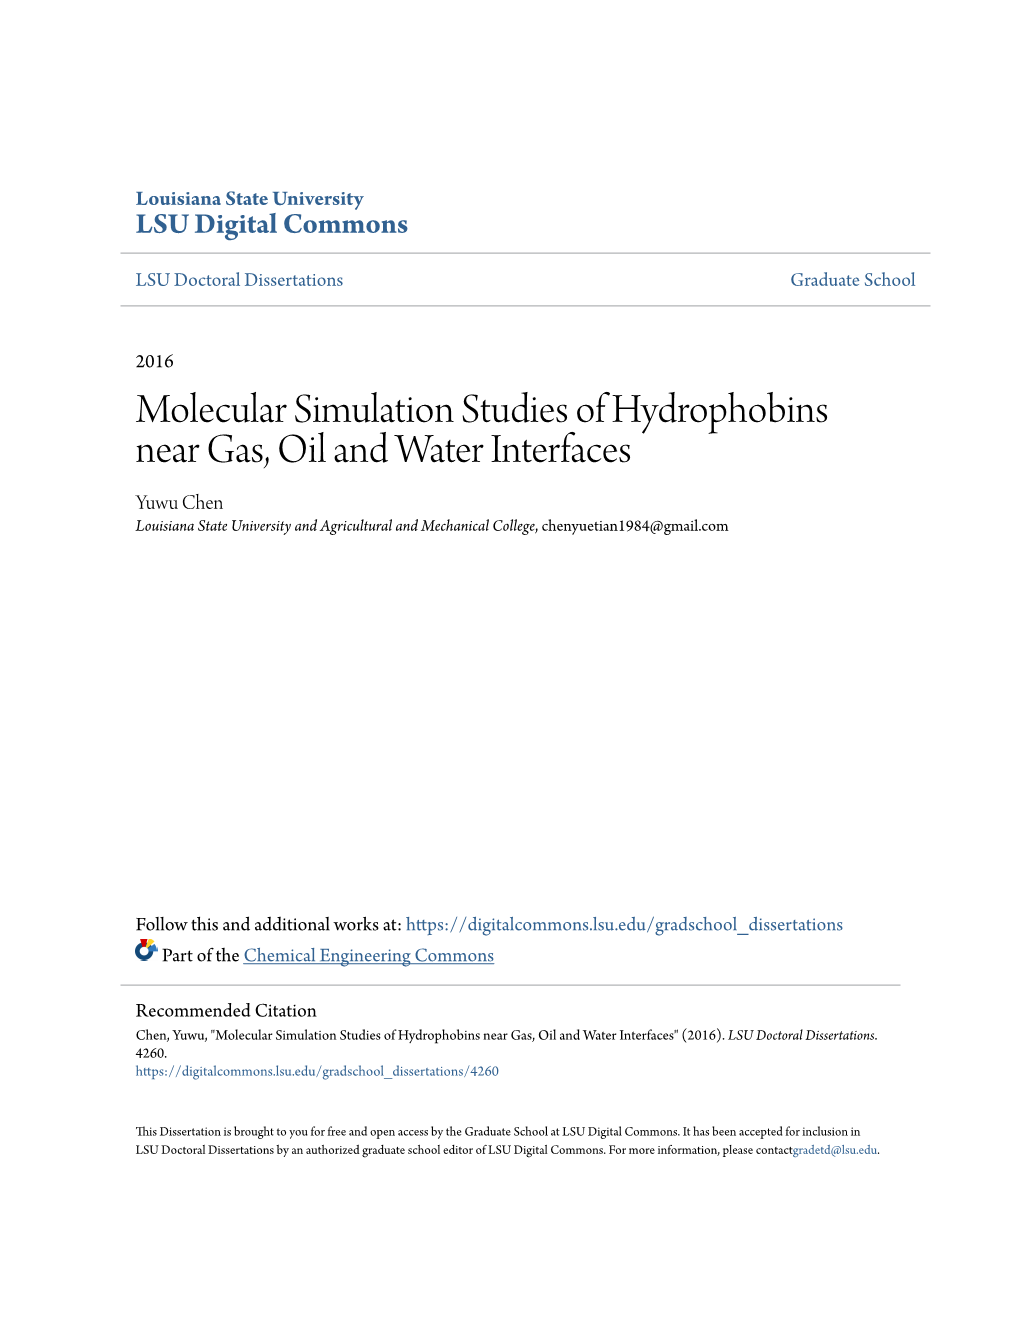 Molecular Simulation Studies of Hydrophobins Near Gas, Oil And